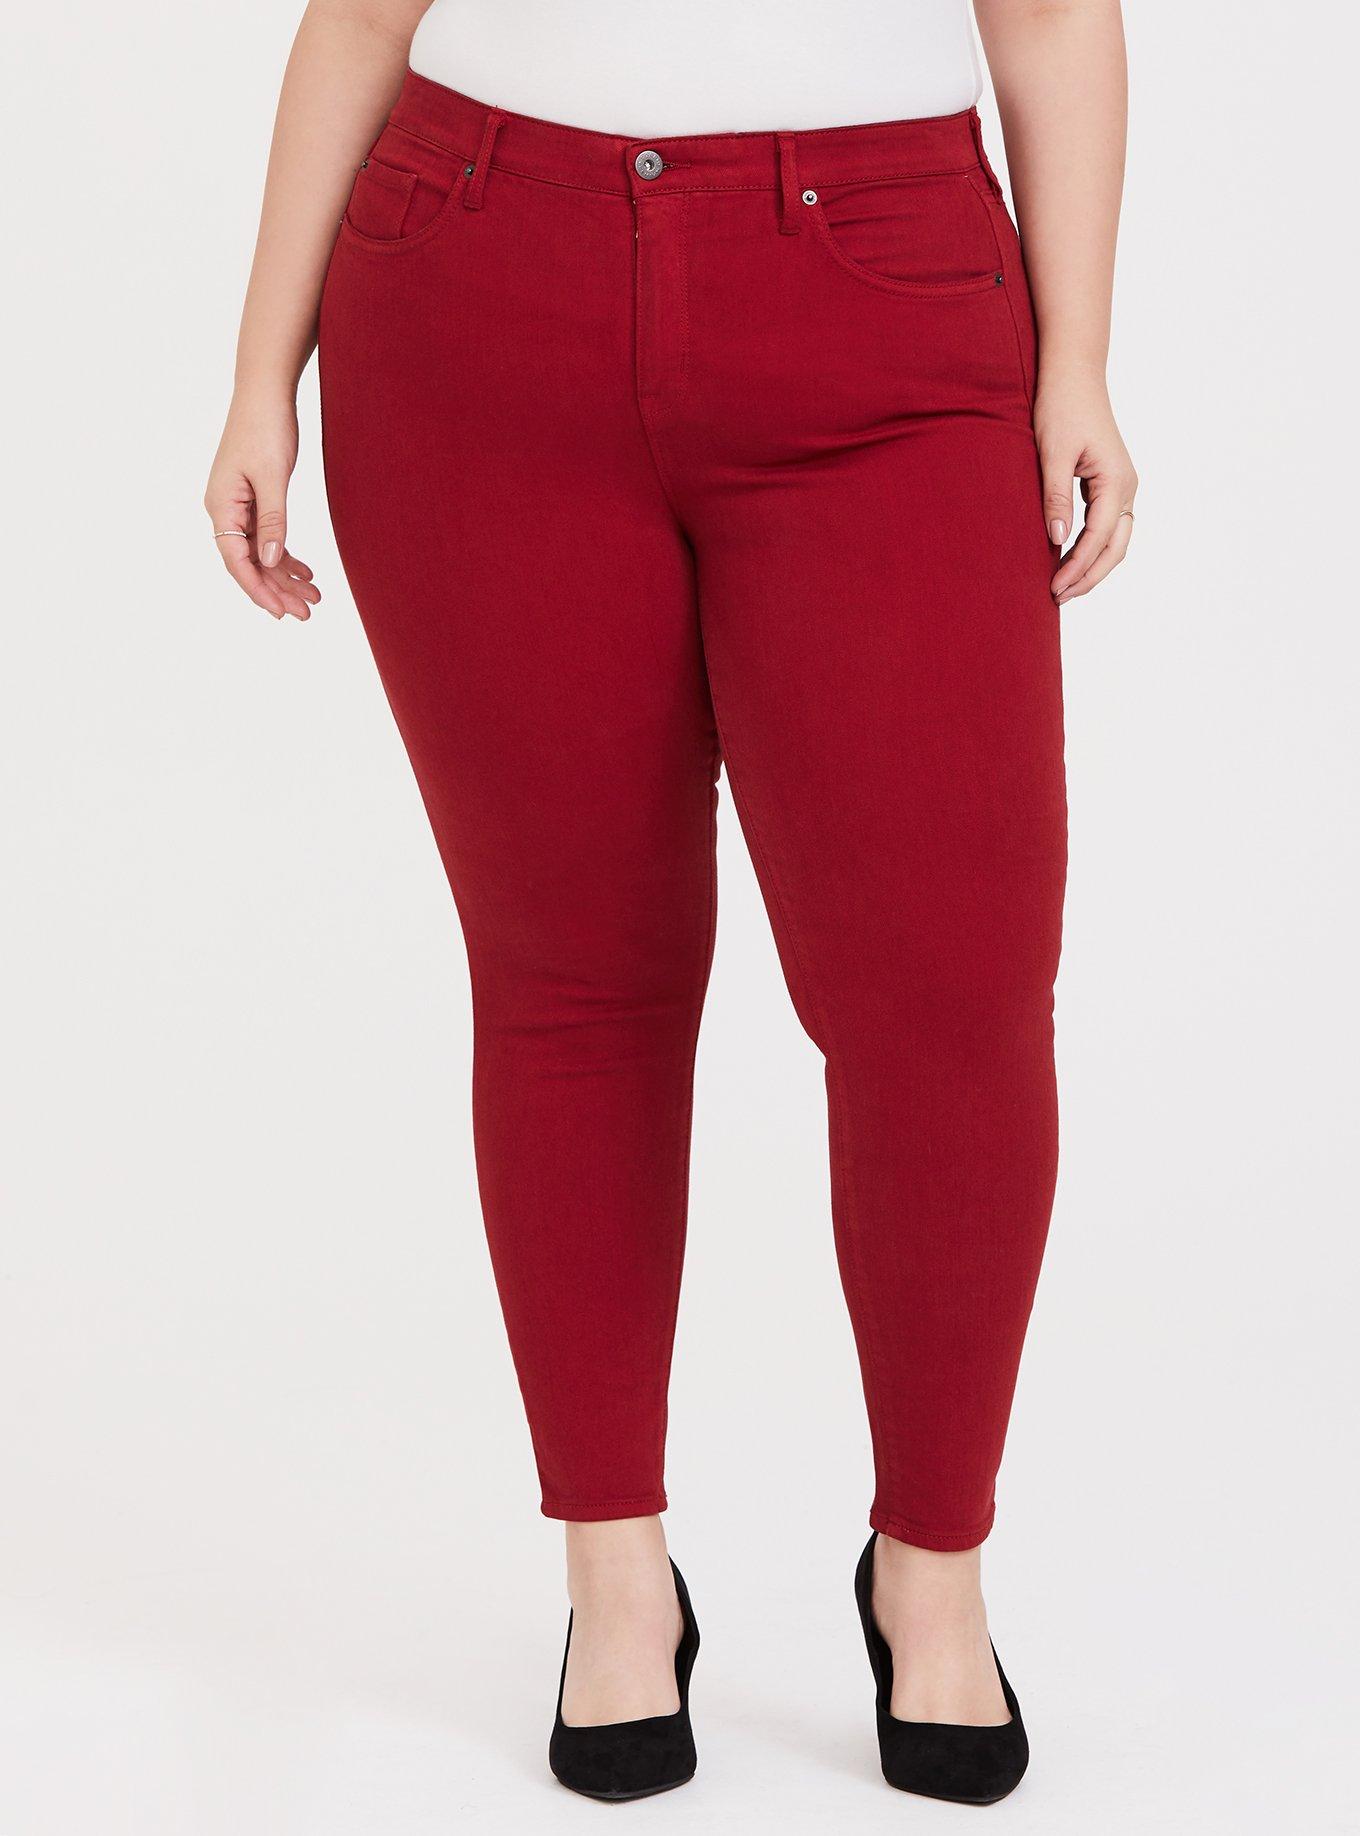 Plus Size - Sky High Skinny Jean - Premium Stretch Red - Torrid